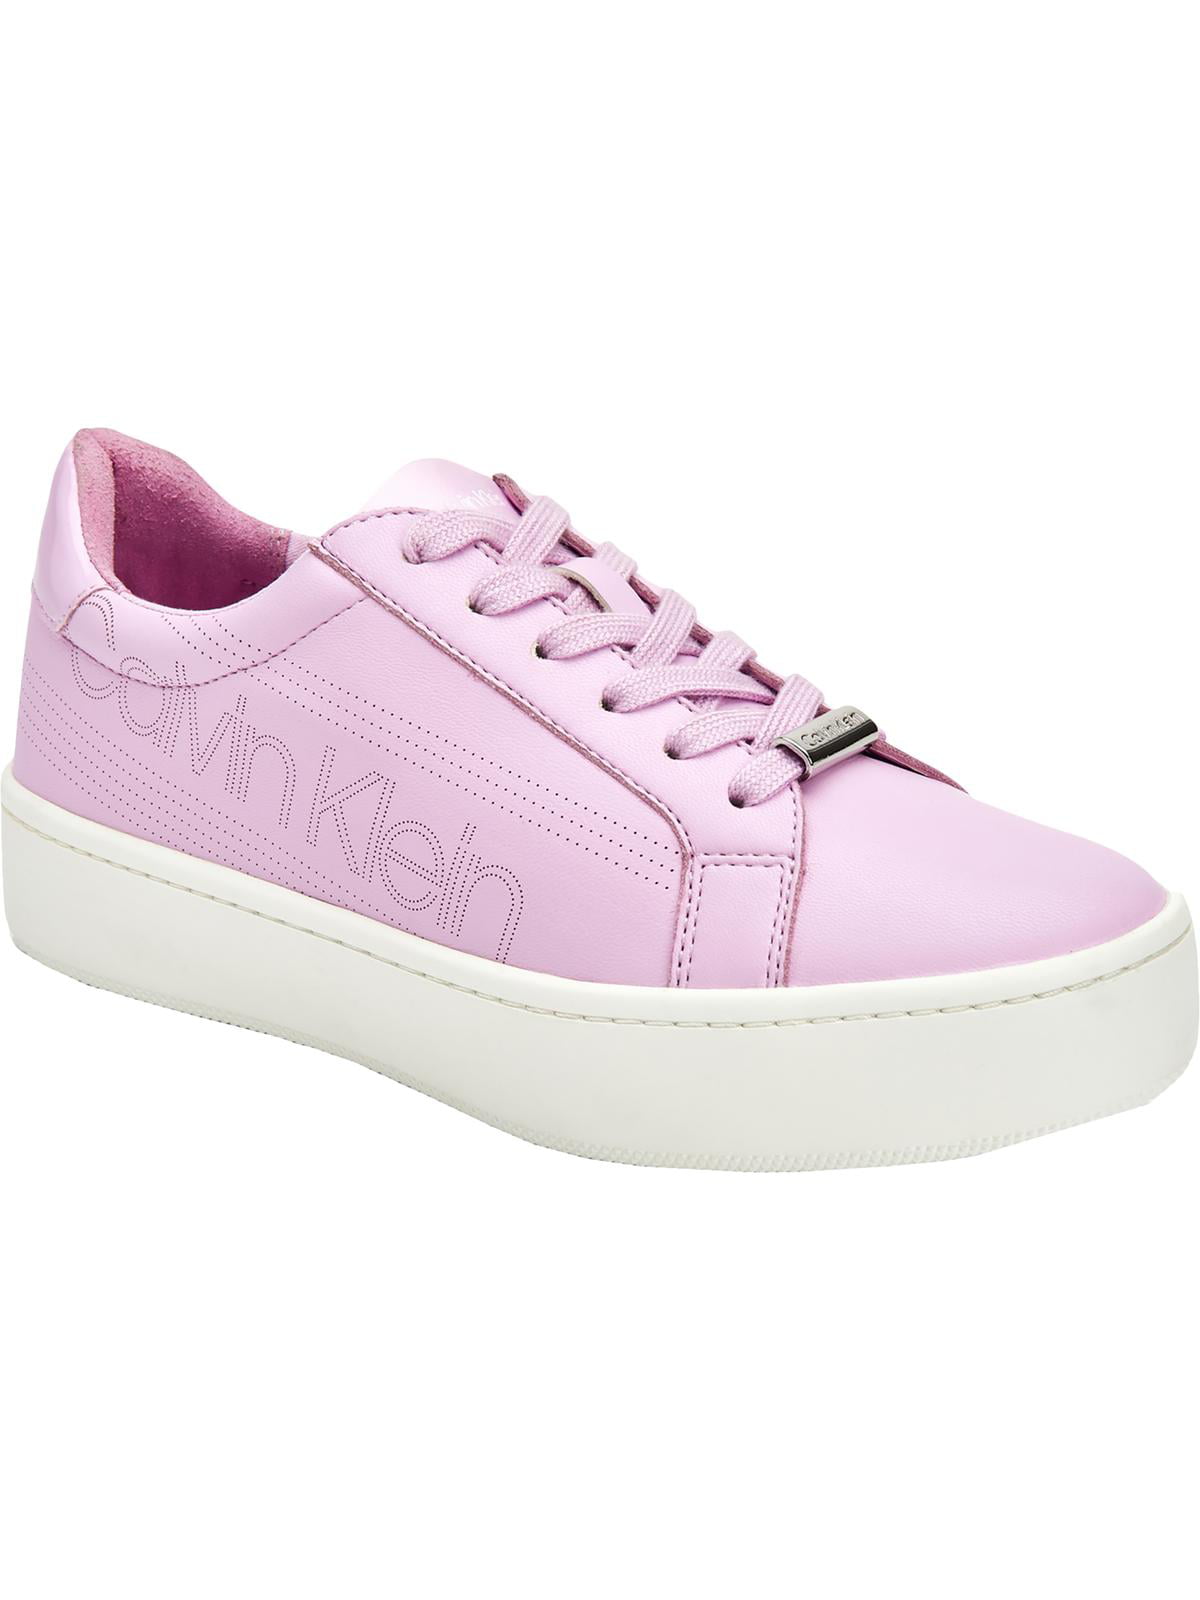 Calvin Klein Womens Clarine Leather Fashion Sneakers Pink  Medium (B,M)  